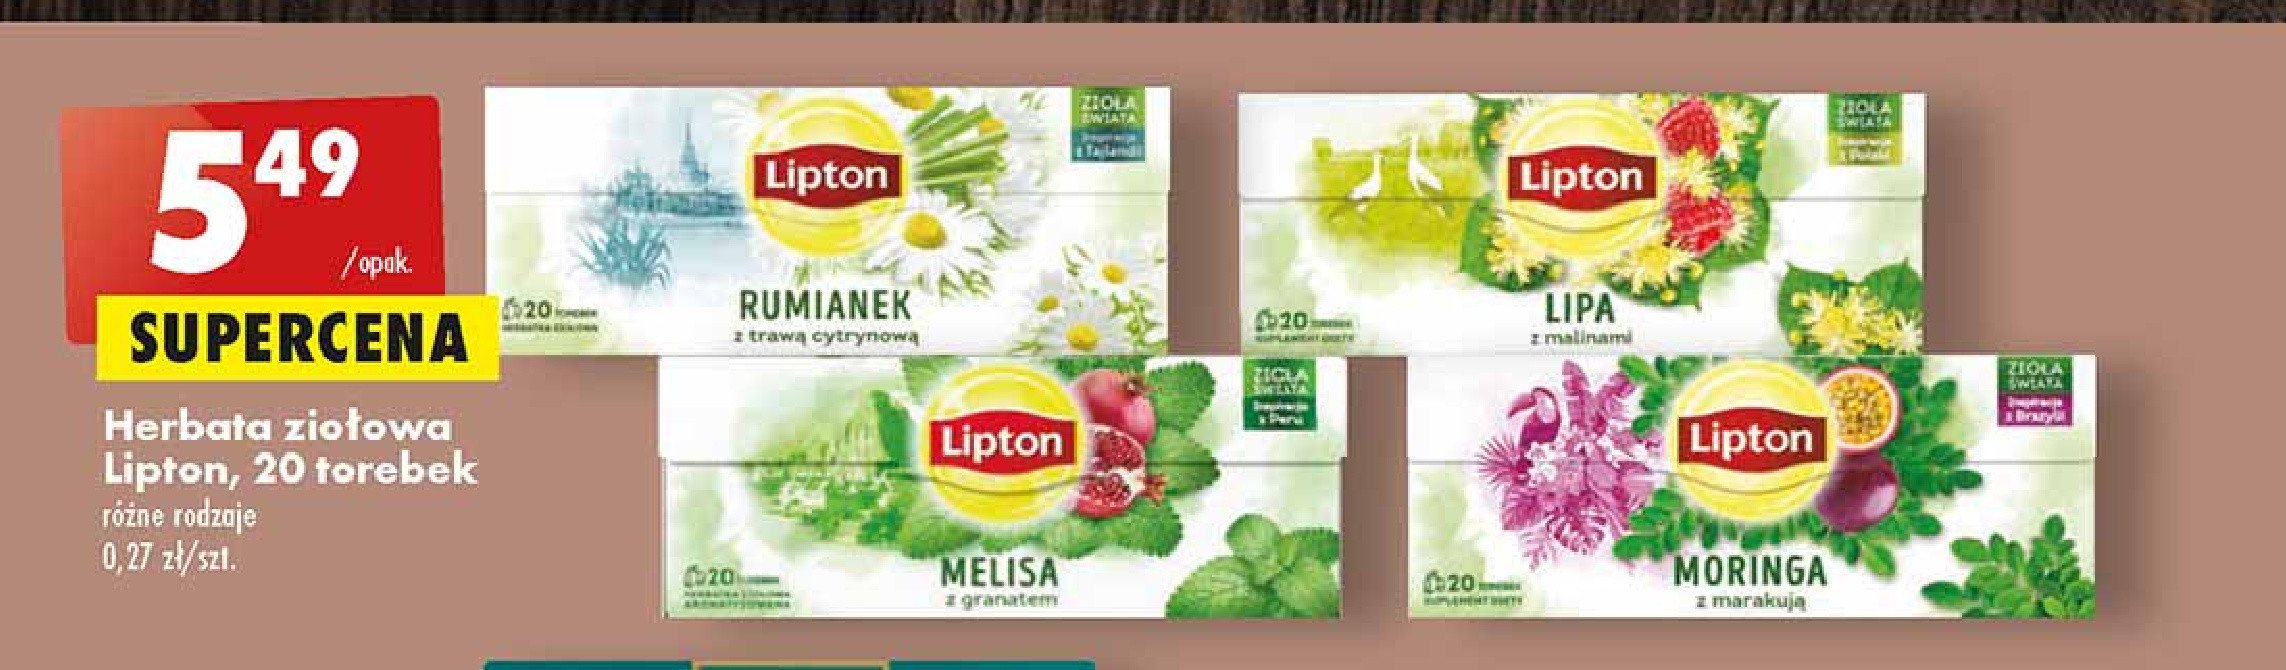 Herbata moringa z marakują Lipton zioła świata promocja